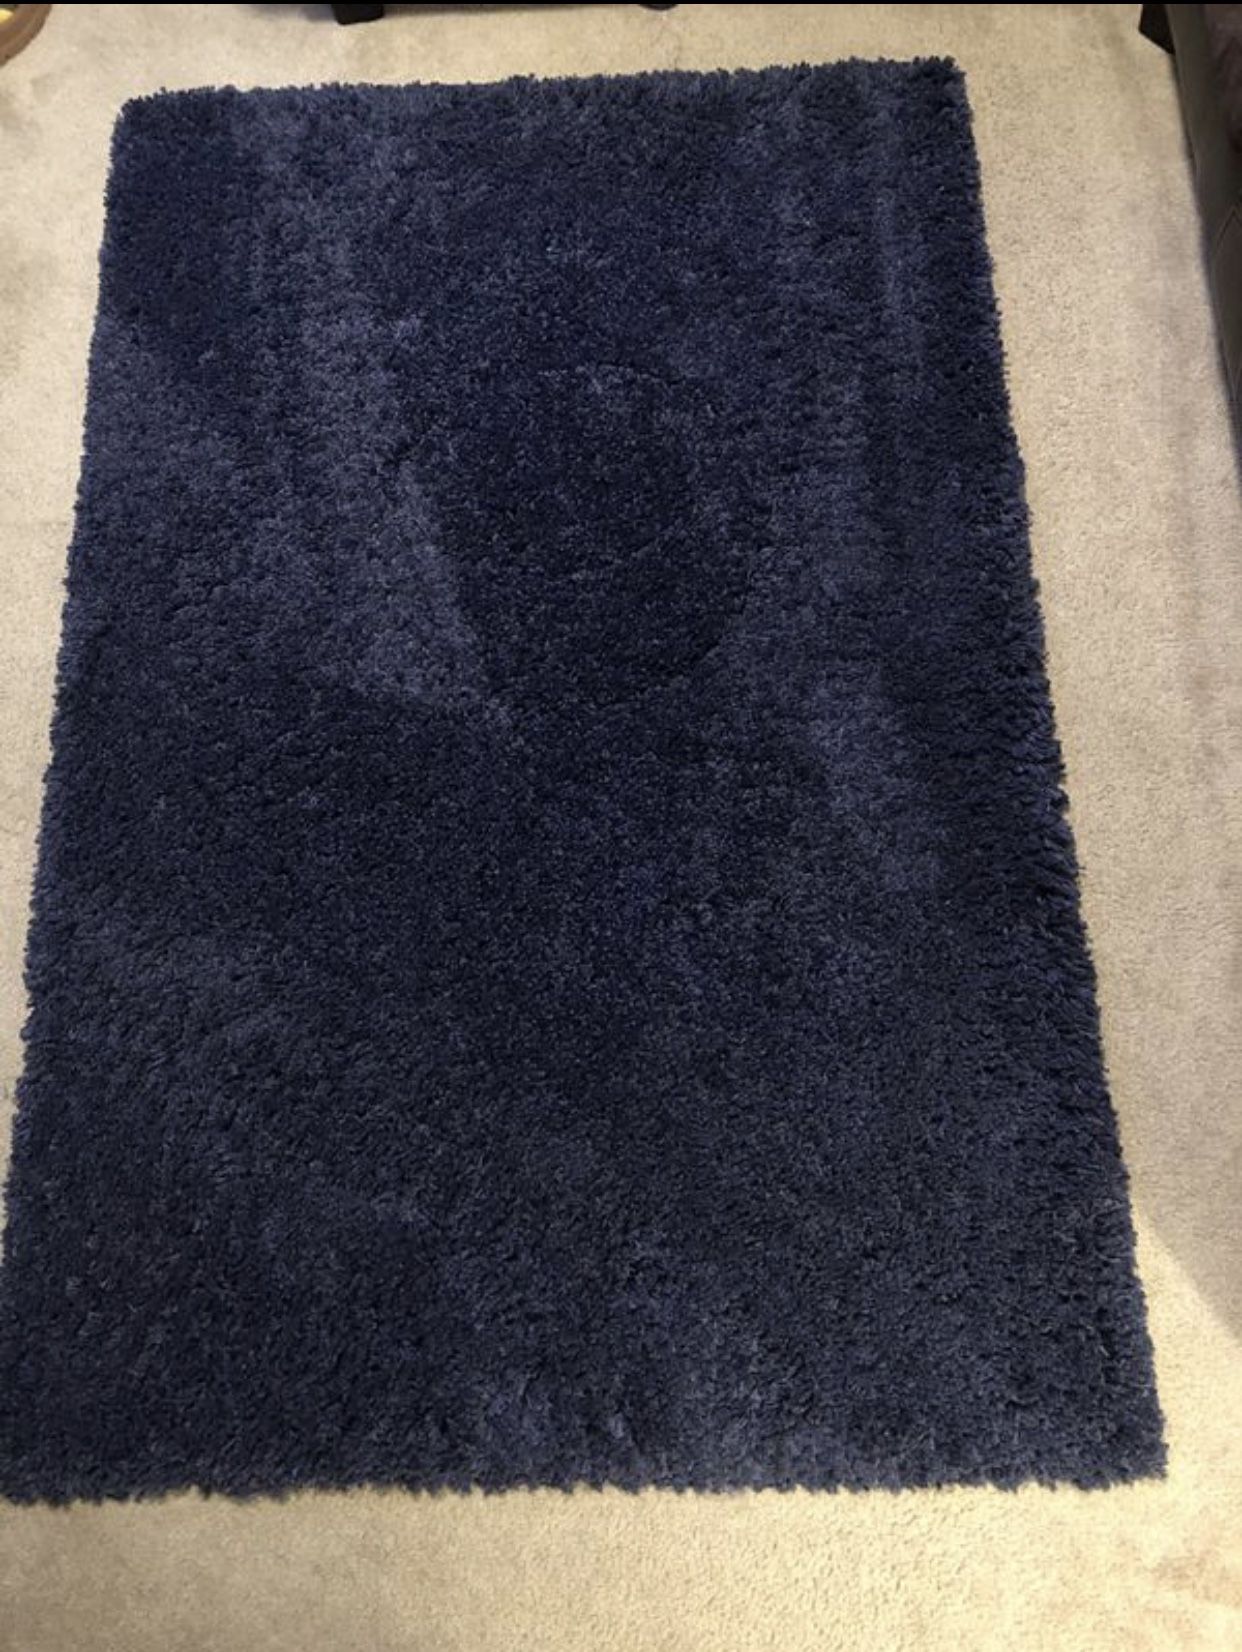 Shag area rug (blue)